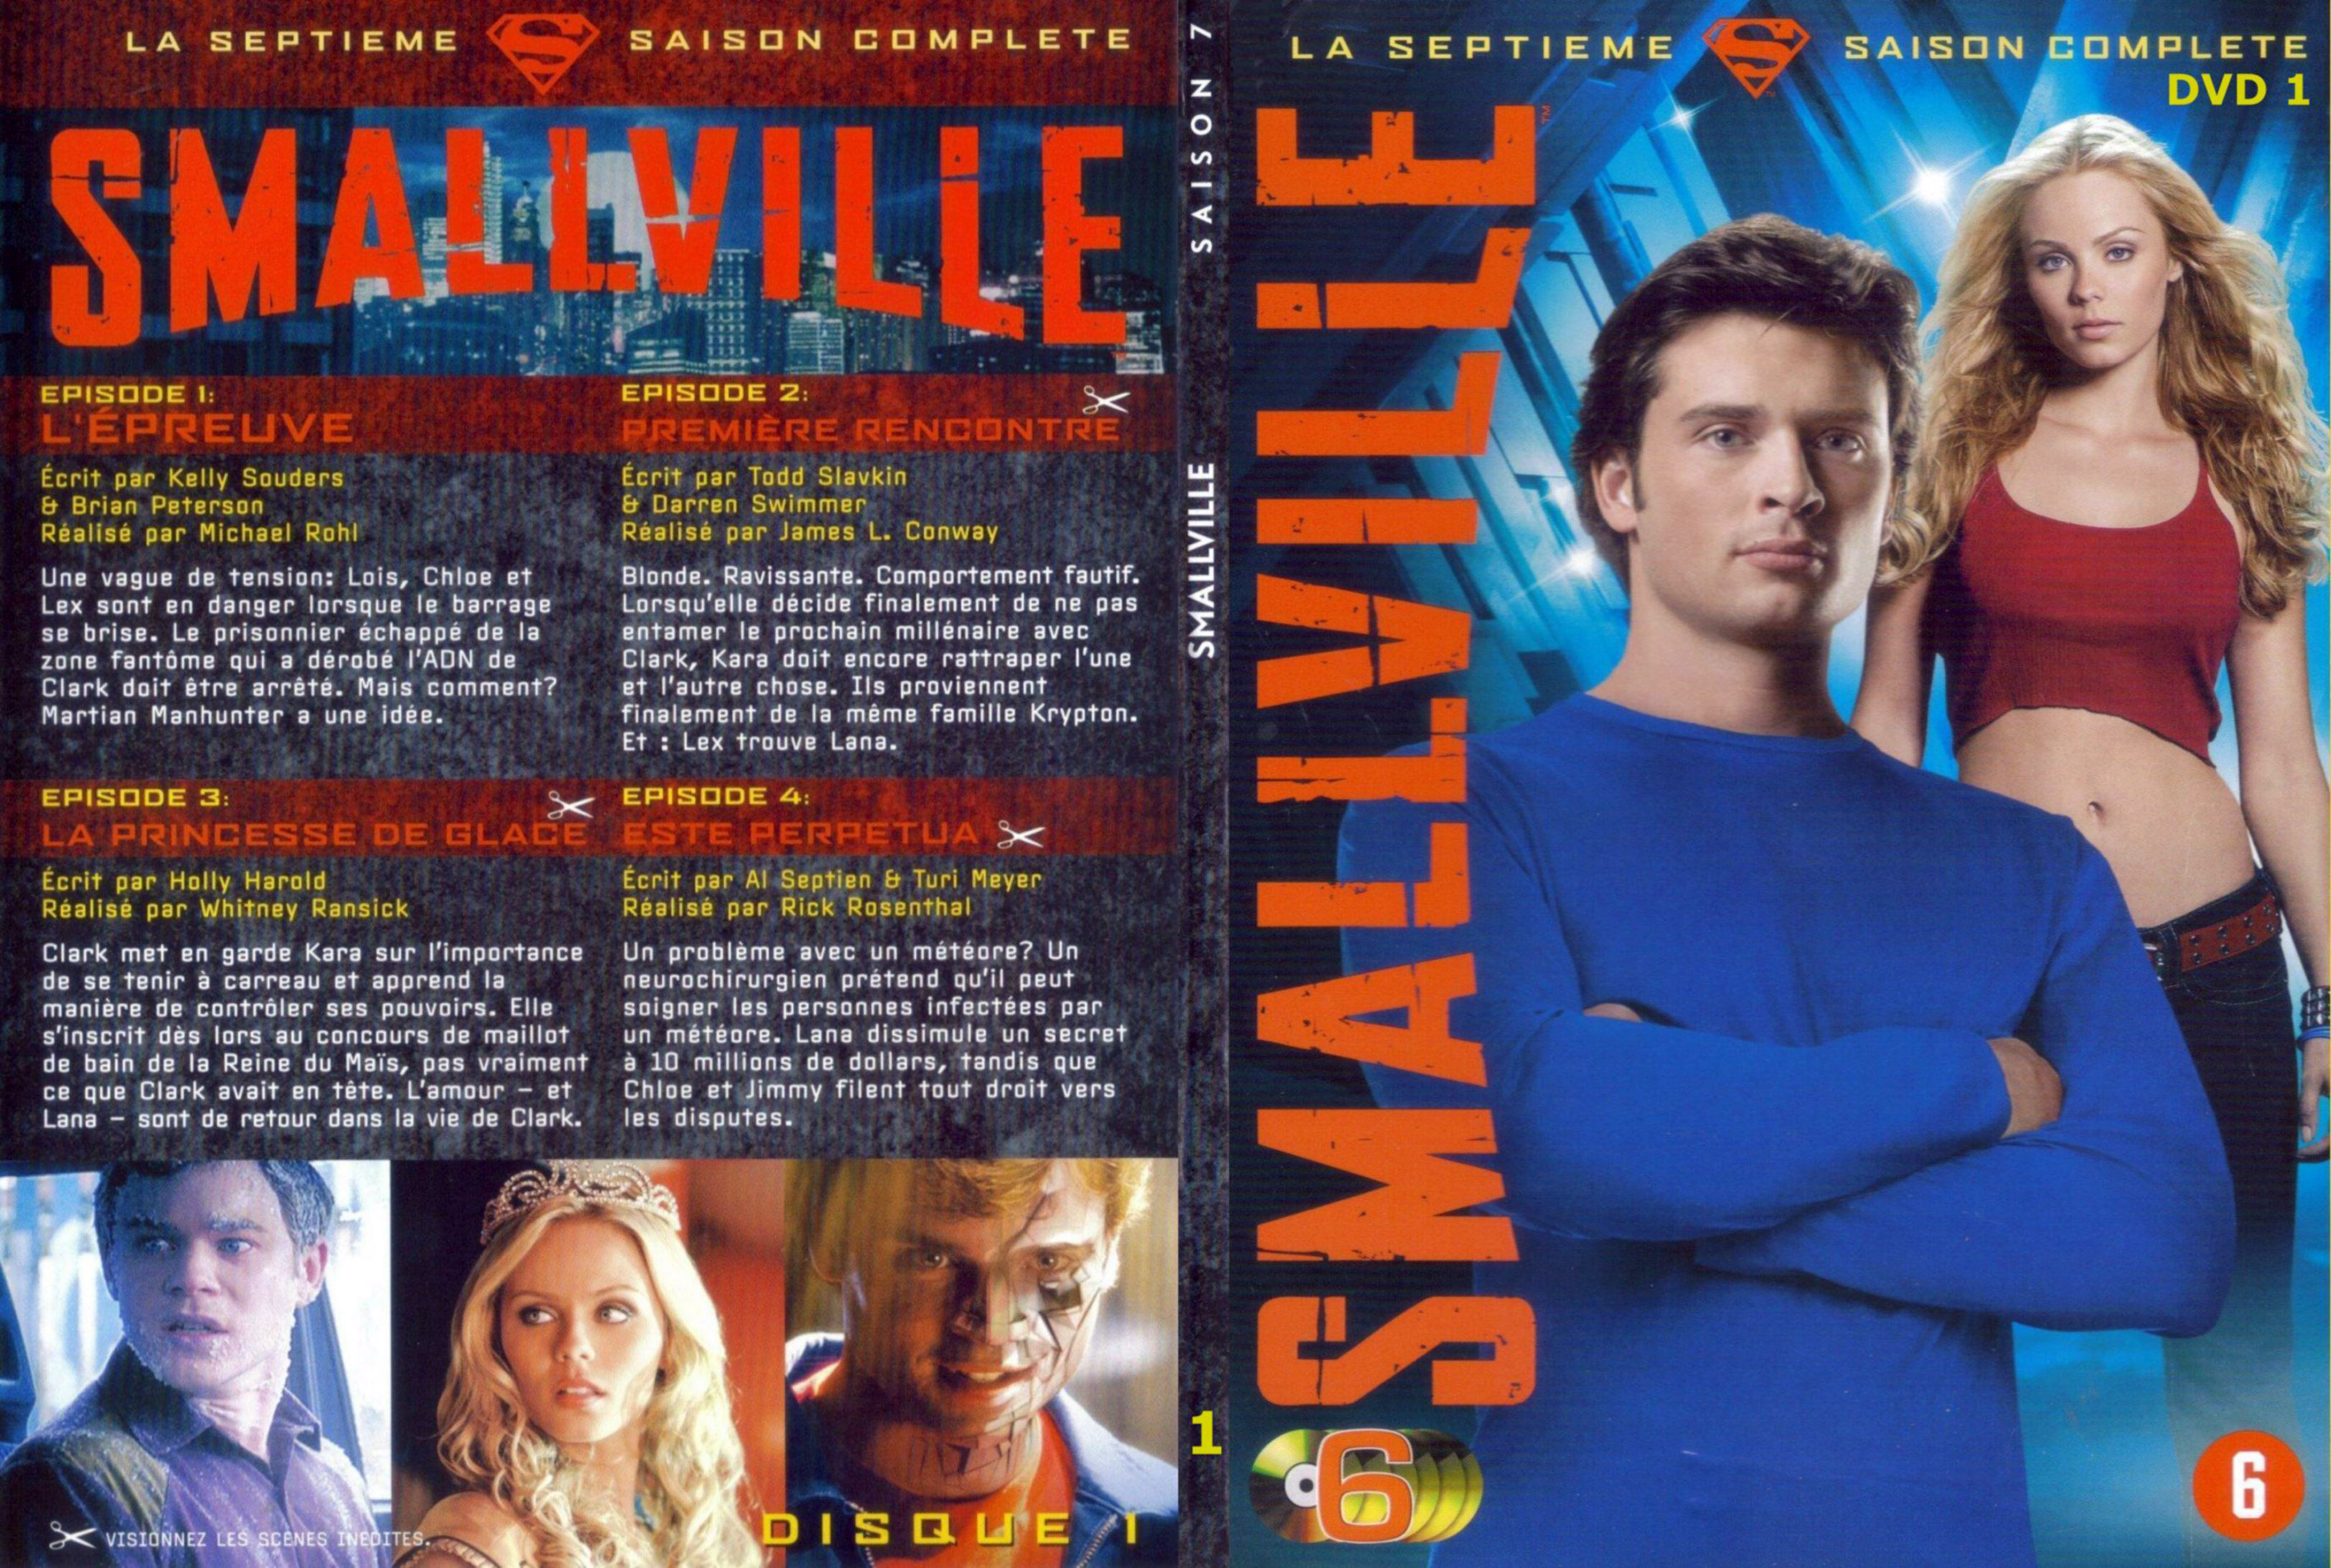 Jaquette DVD Smallville saison 7 DVD 1